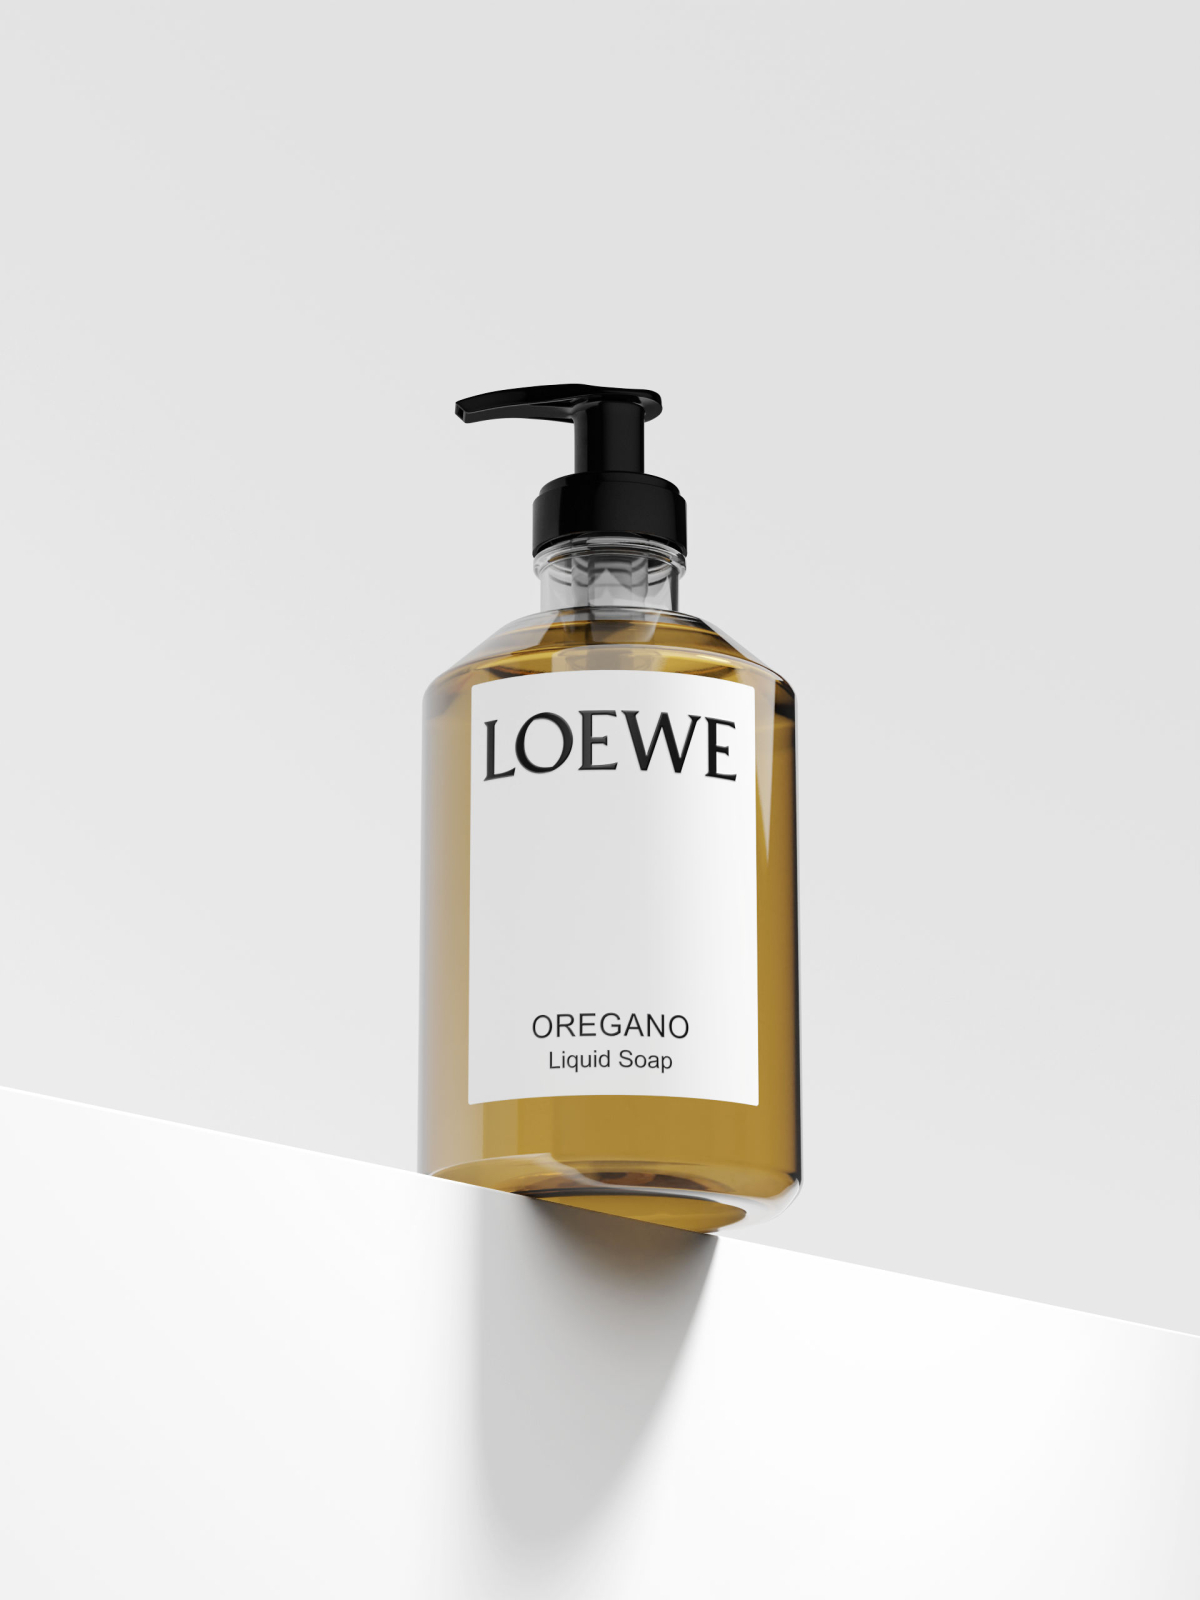 1 Loewe Oregano V2 - Loewe Oregano Liquid Soap CGI - Sonny Nguyen